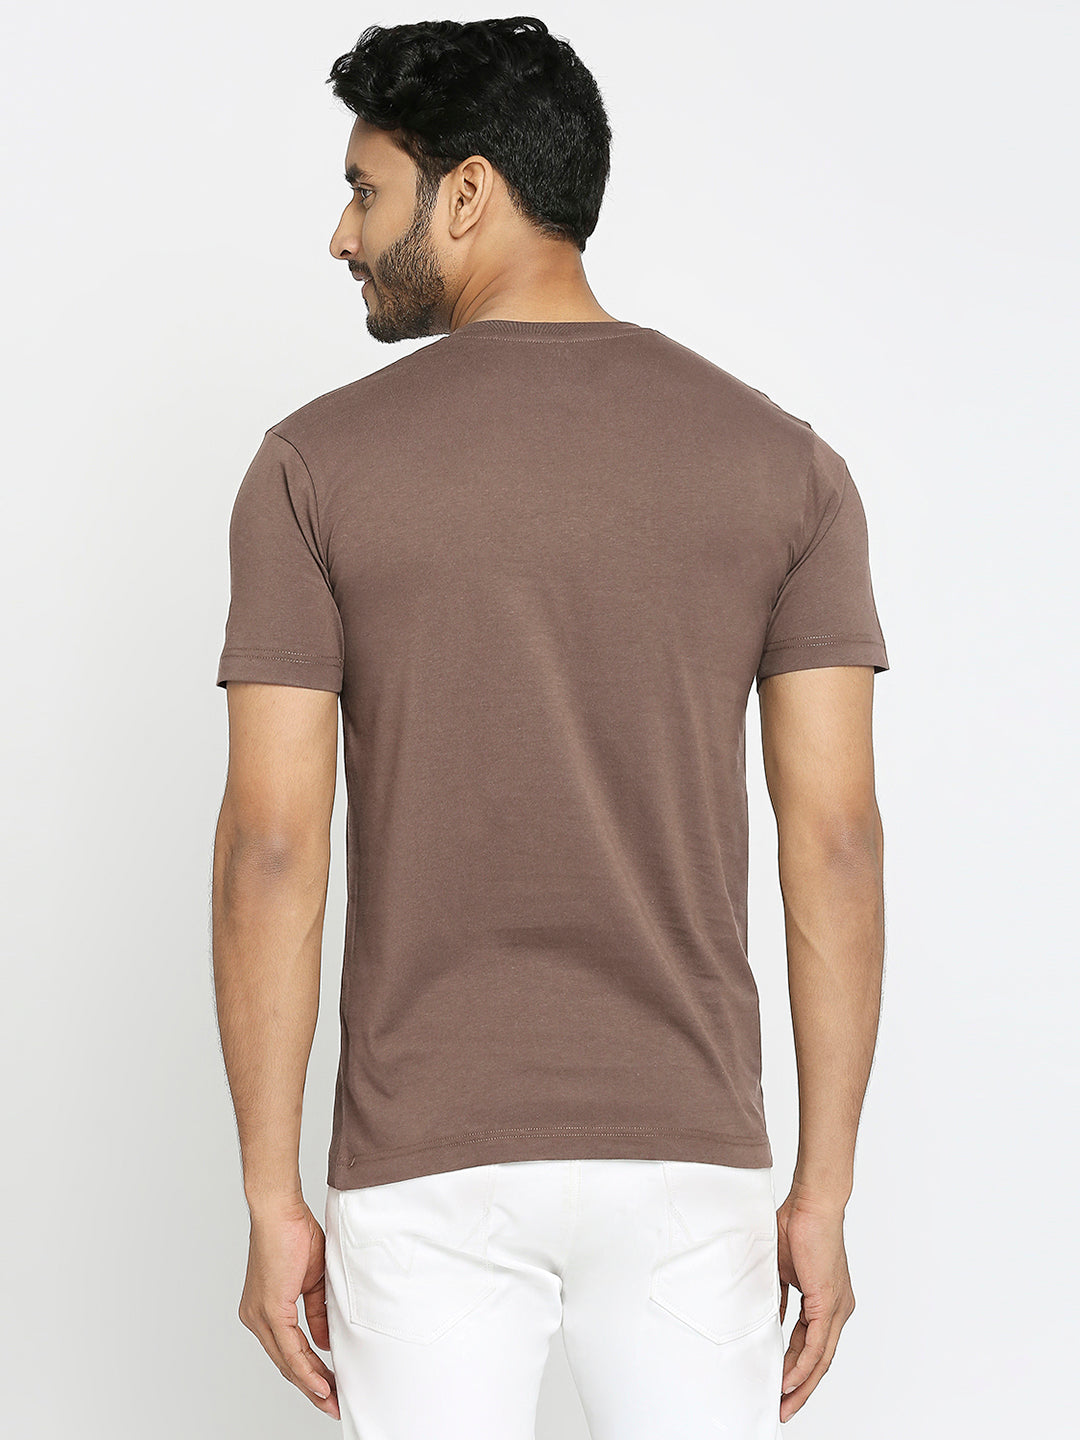 VIP Mens Brown Colour Round Neck T-Shirt